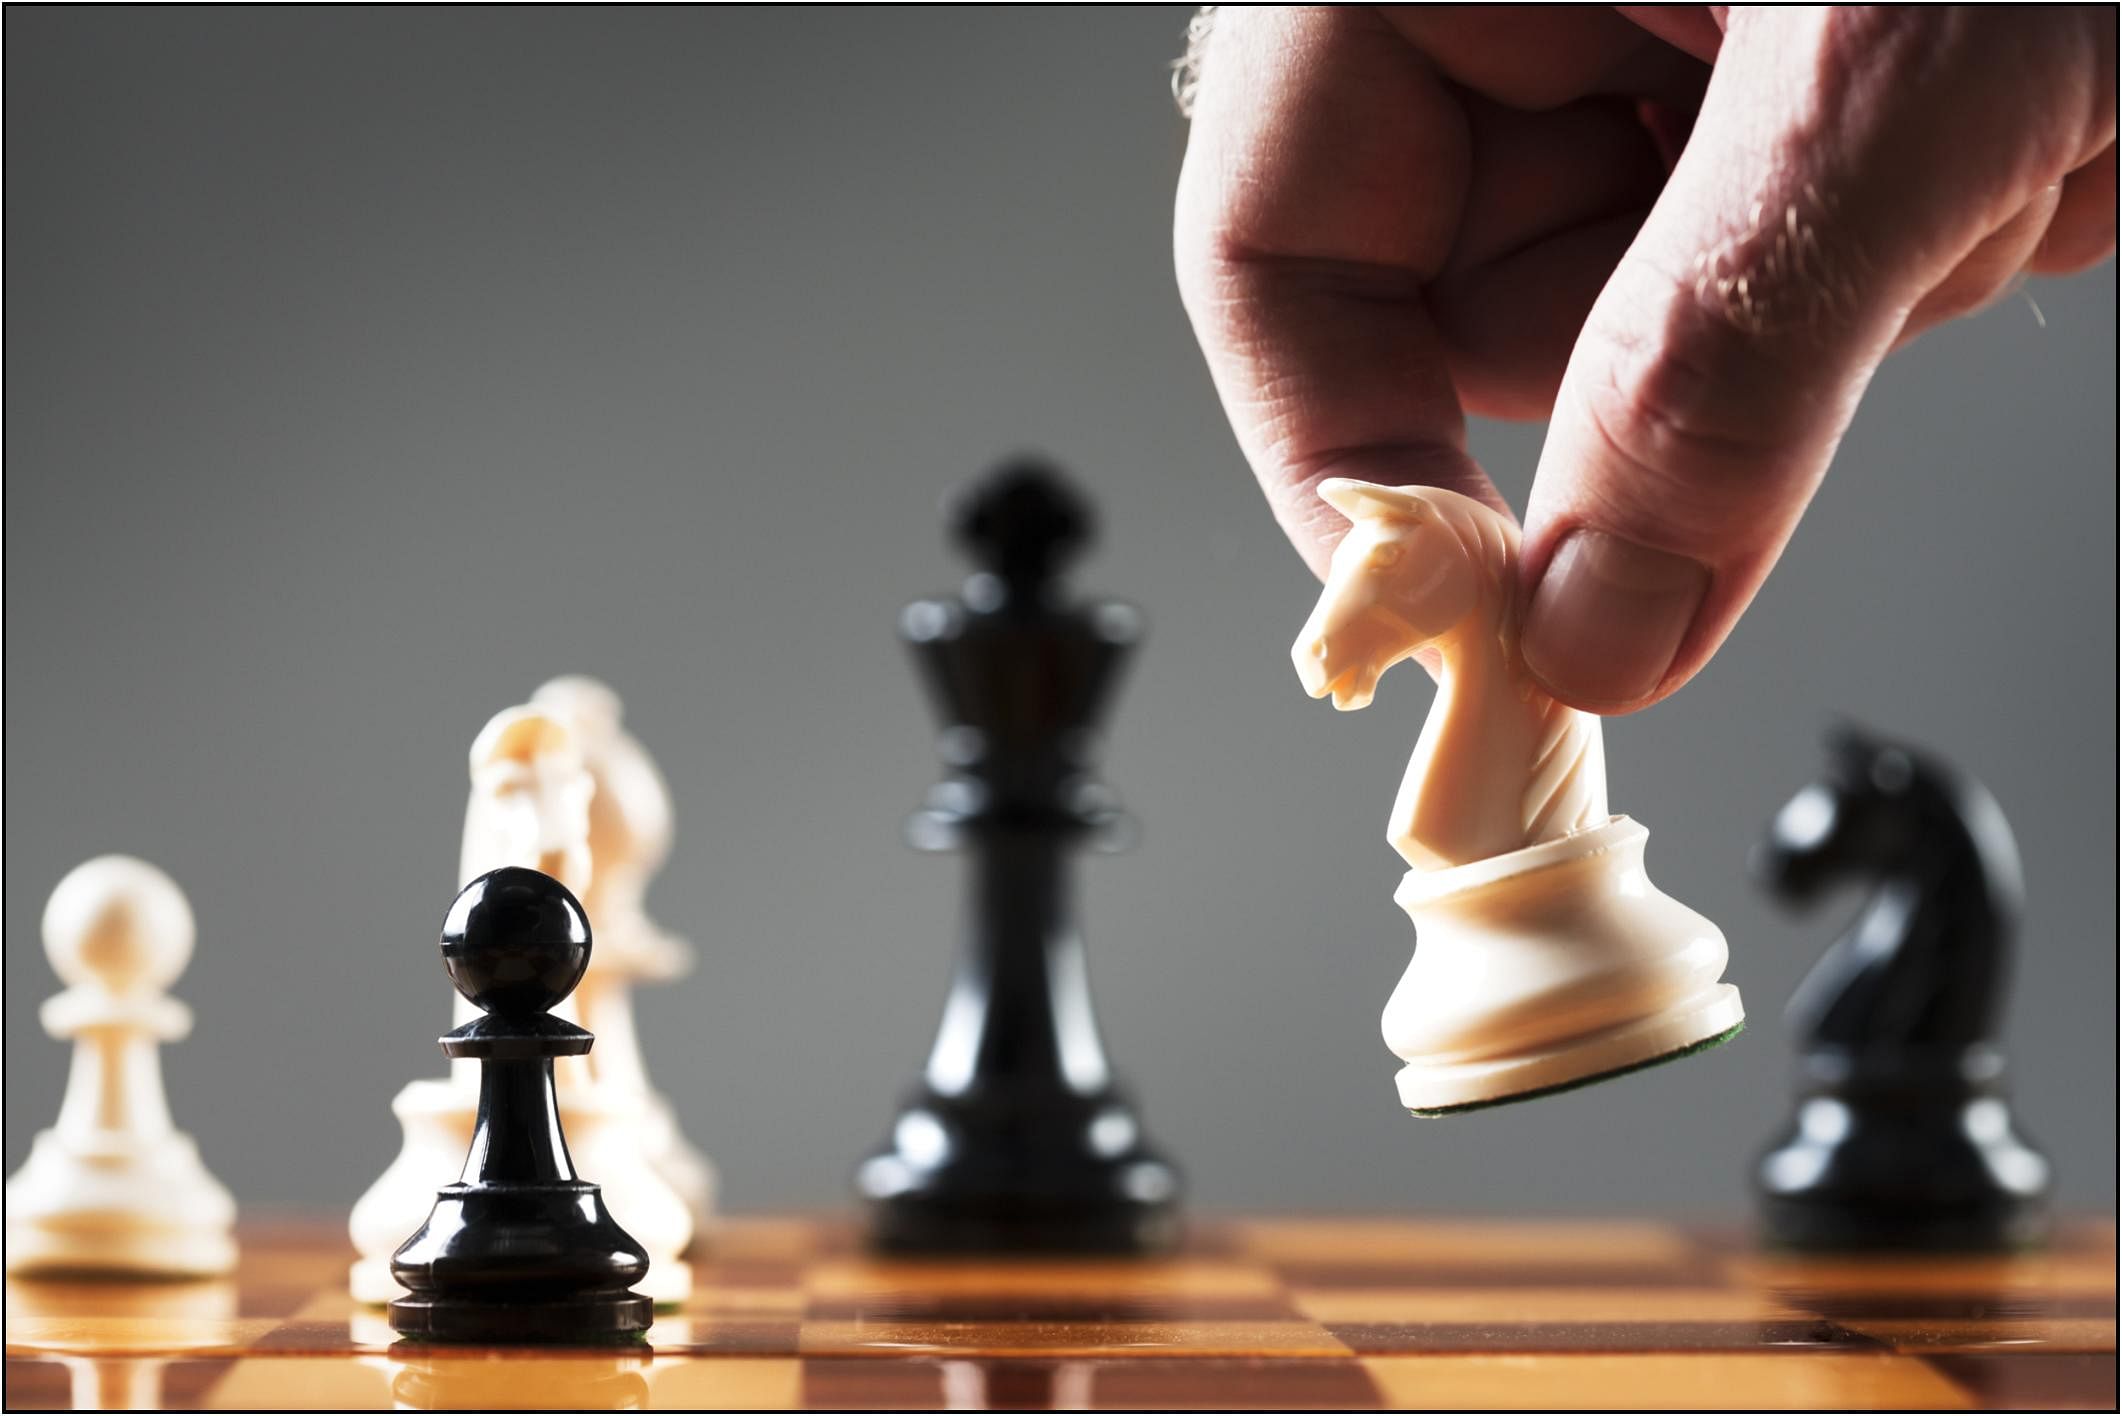 http://static.sportskeeda.com/wp-content/uploads/2015/04/chess-1427831819-2352632.jpg